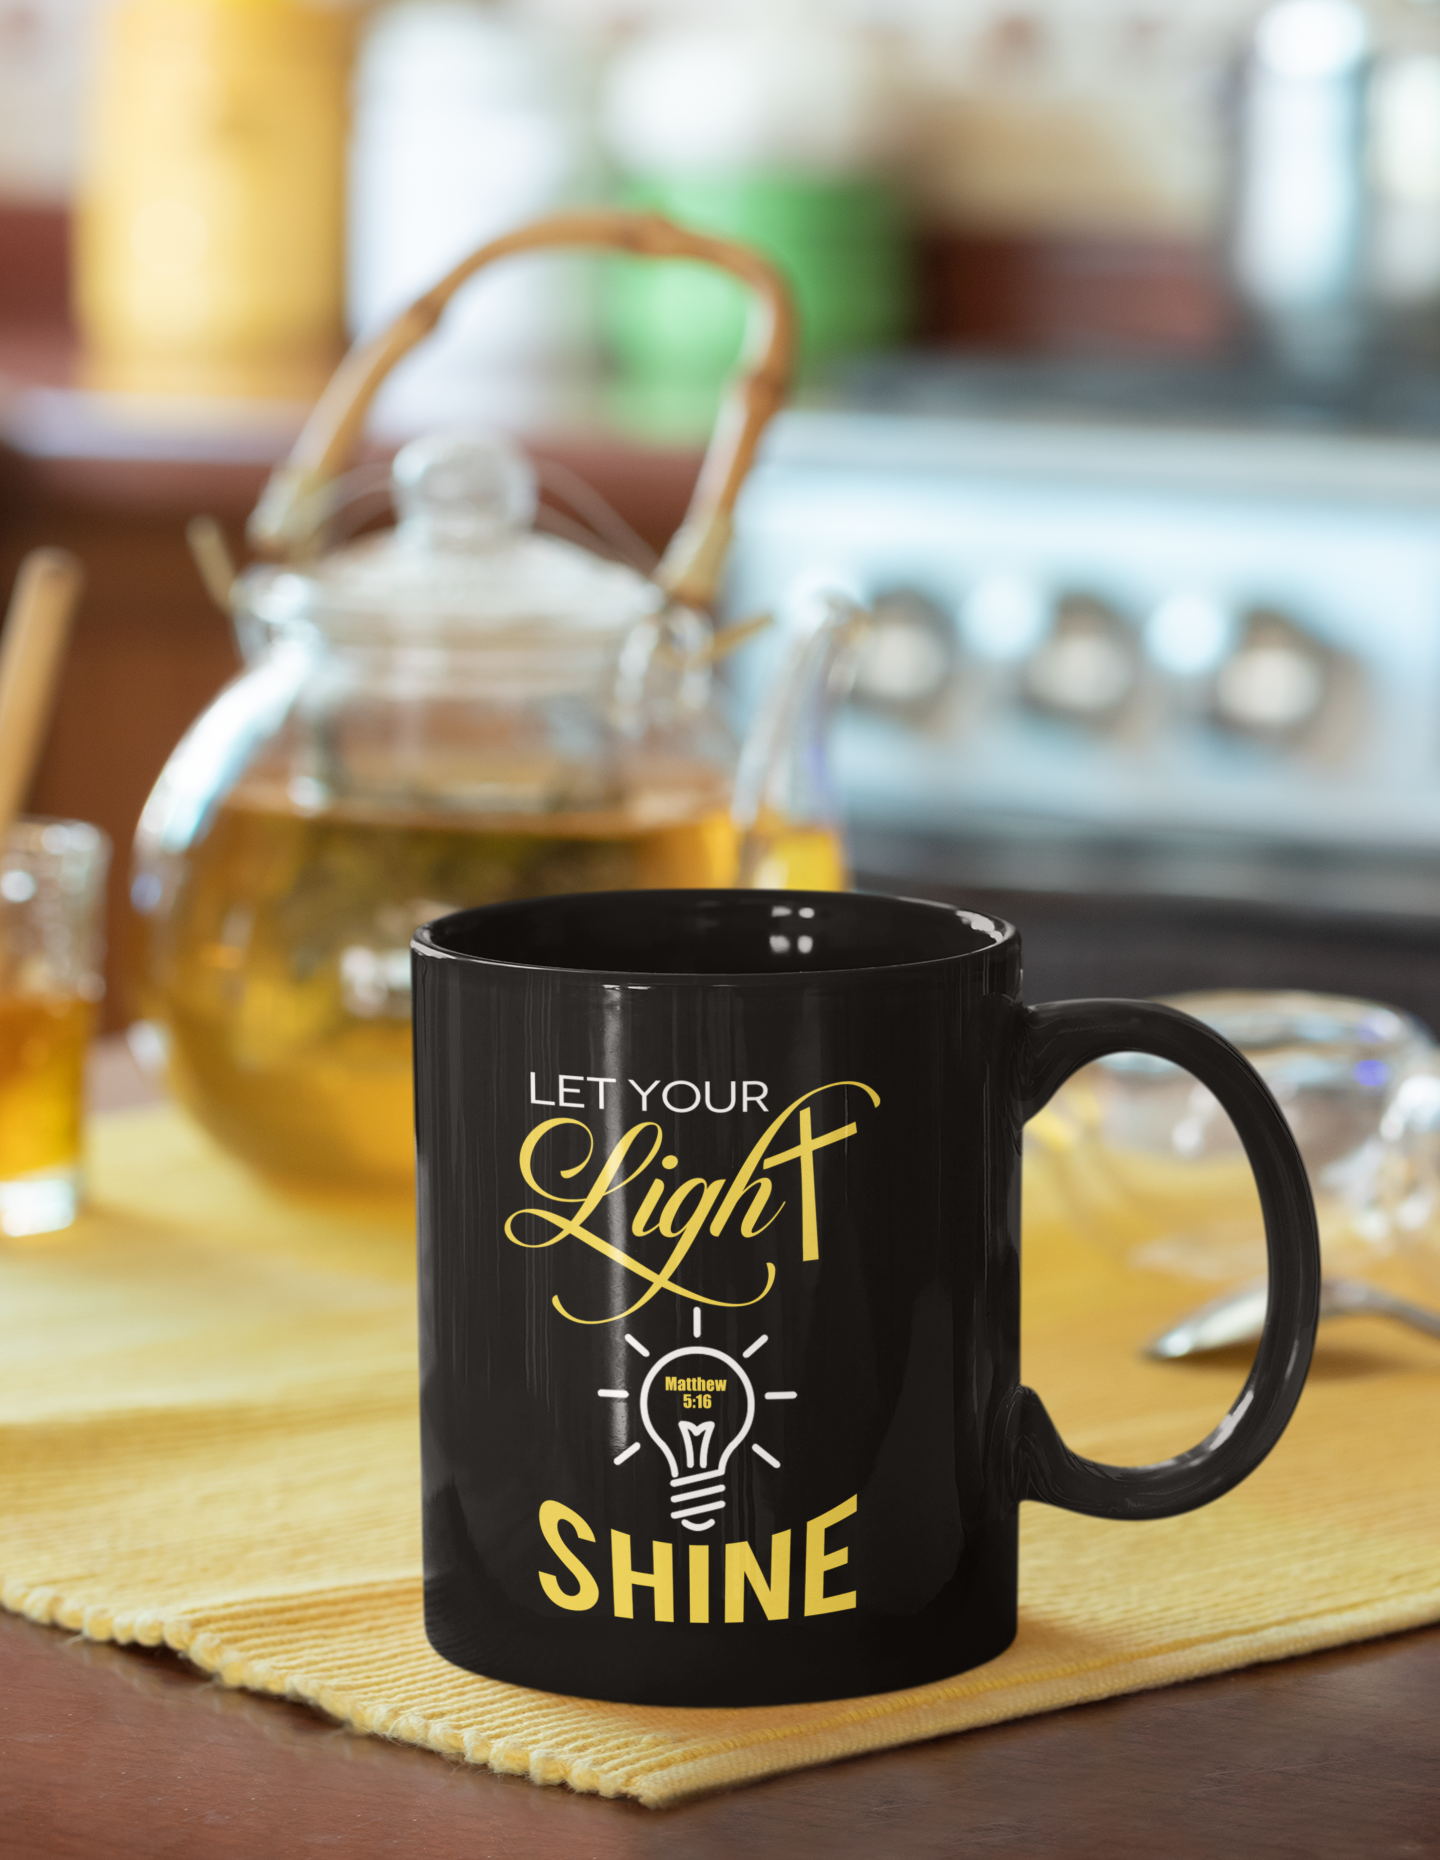 Let your Light Shine - Coffee Mugs